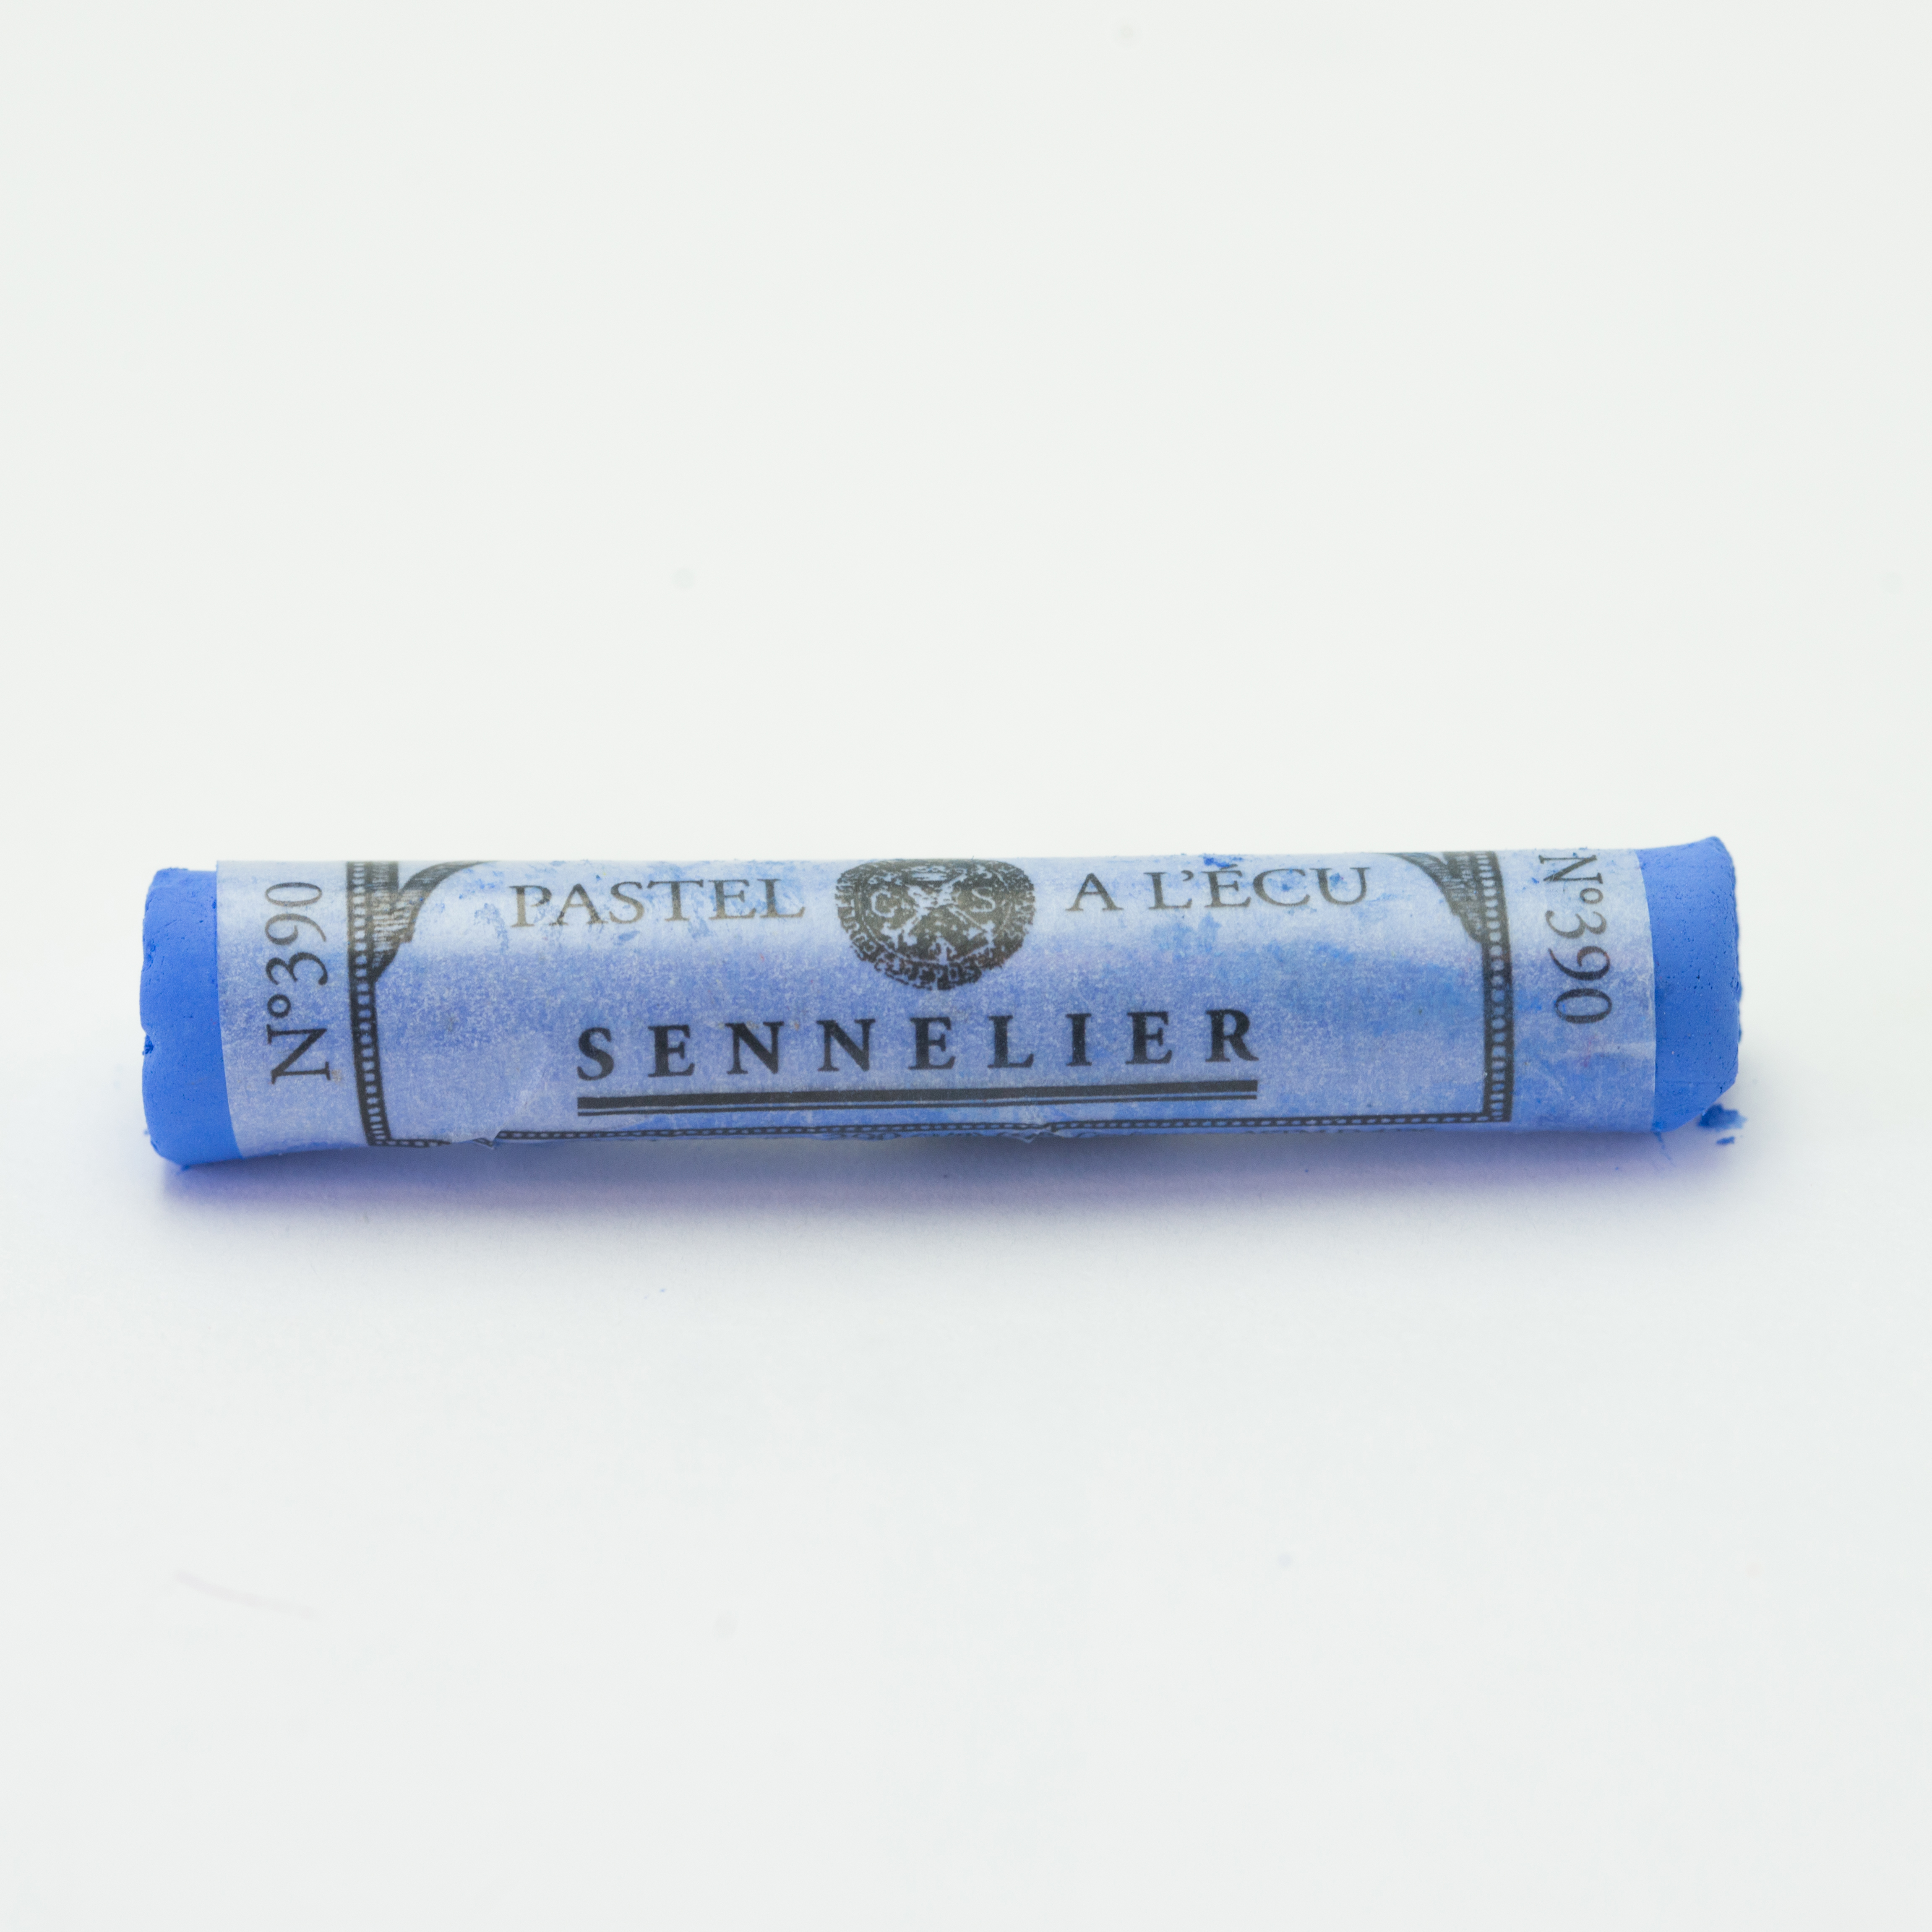 Sennelier Extra Soft Pastels - Ultramarine Blue 390